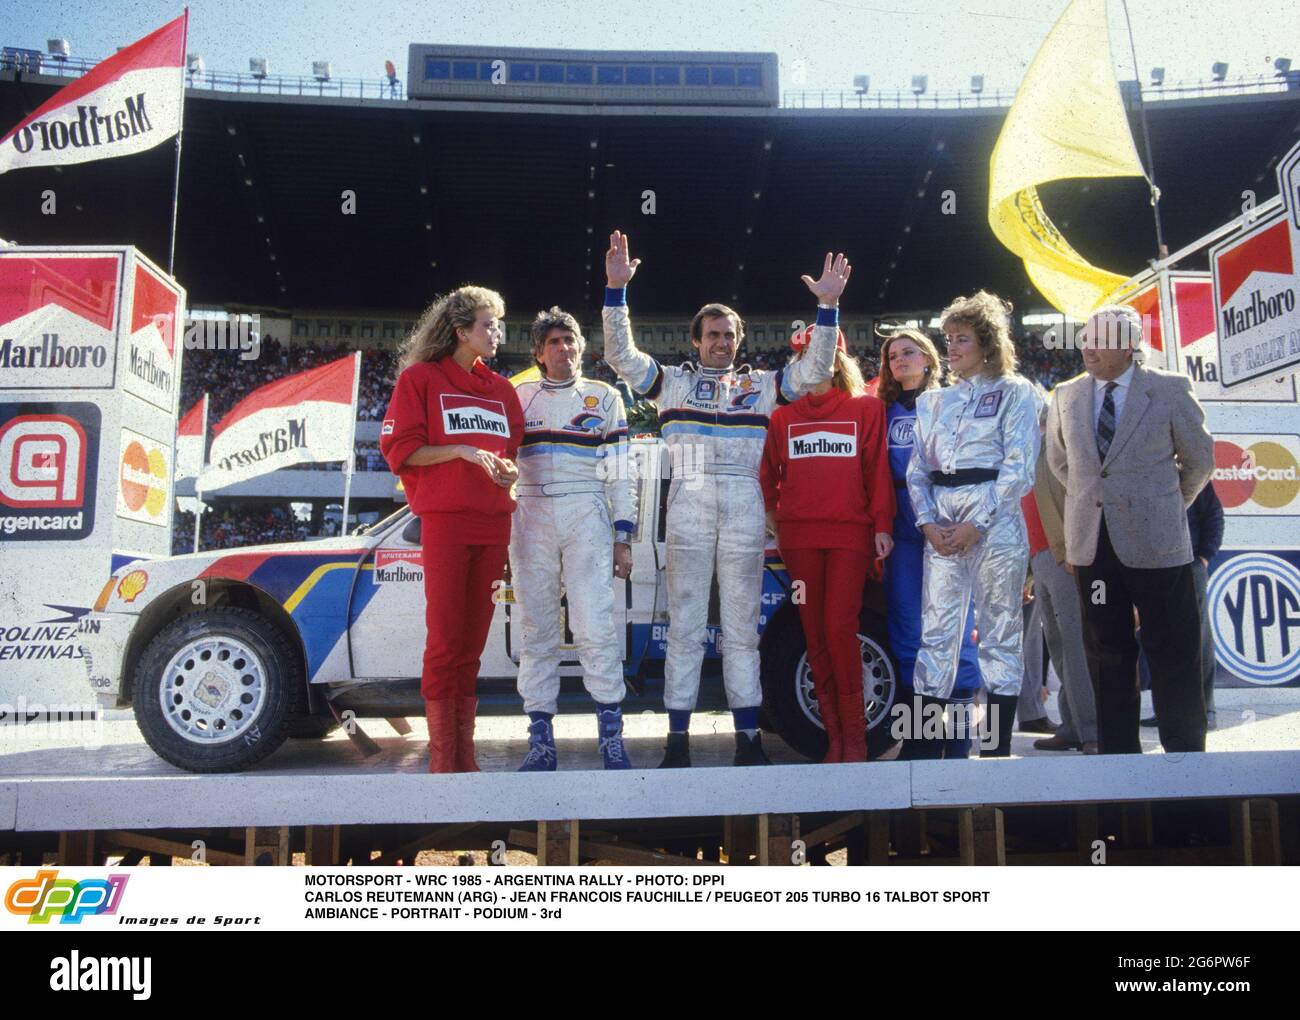 MOTORSPORT - WRC 1985 - ARGENTINA RALLY - PHOTO: DPPI CARLOS REUTEMANN (ARG) - JEAN FRANCOIS FAUCHILLE / PEUGEOT 205 TURBO 16 TALBOT SPORT - AMBIANCE - PORTRAIT - PODIUM - 3rd # 00000353 049 Stock Photo